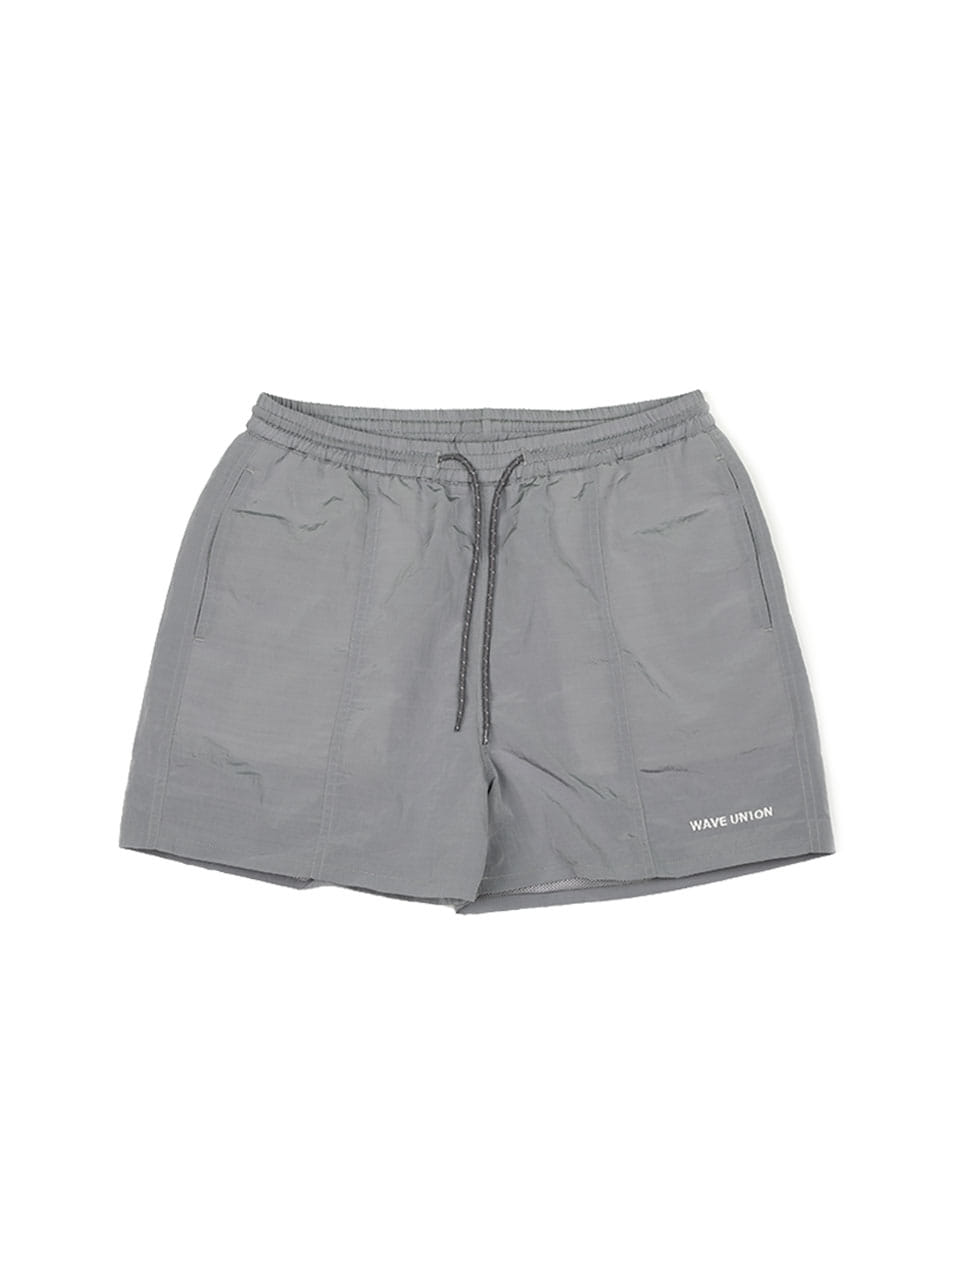 Metallic shorts gray